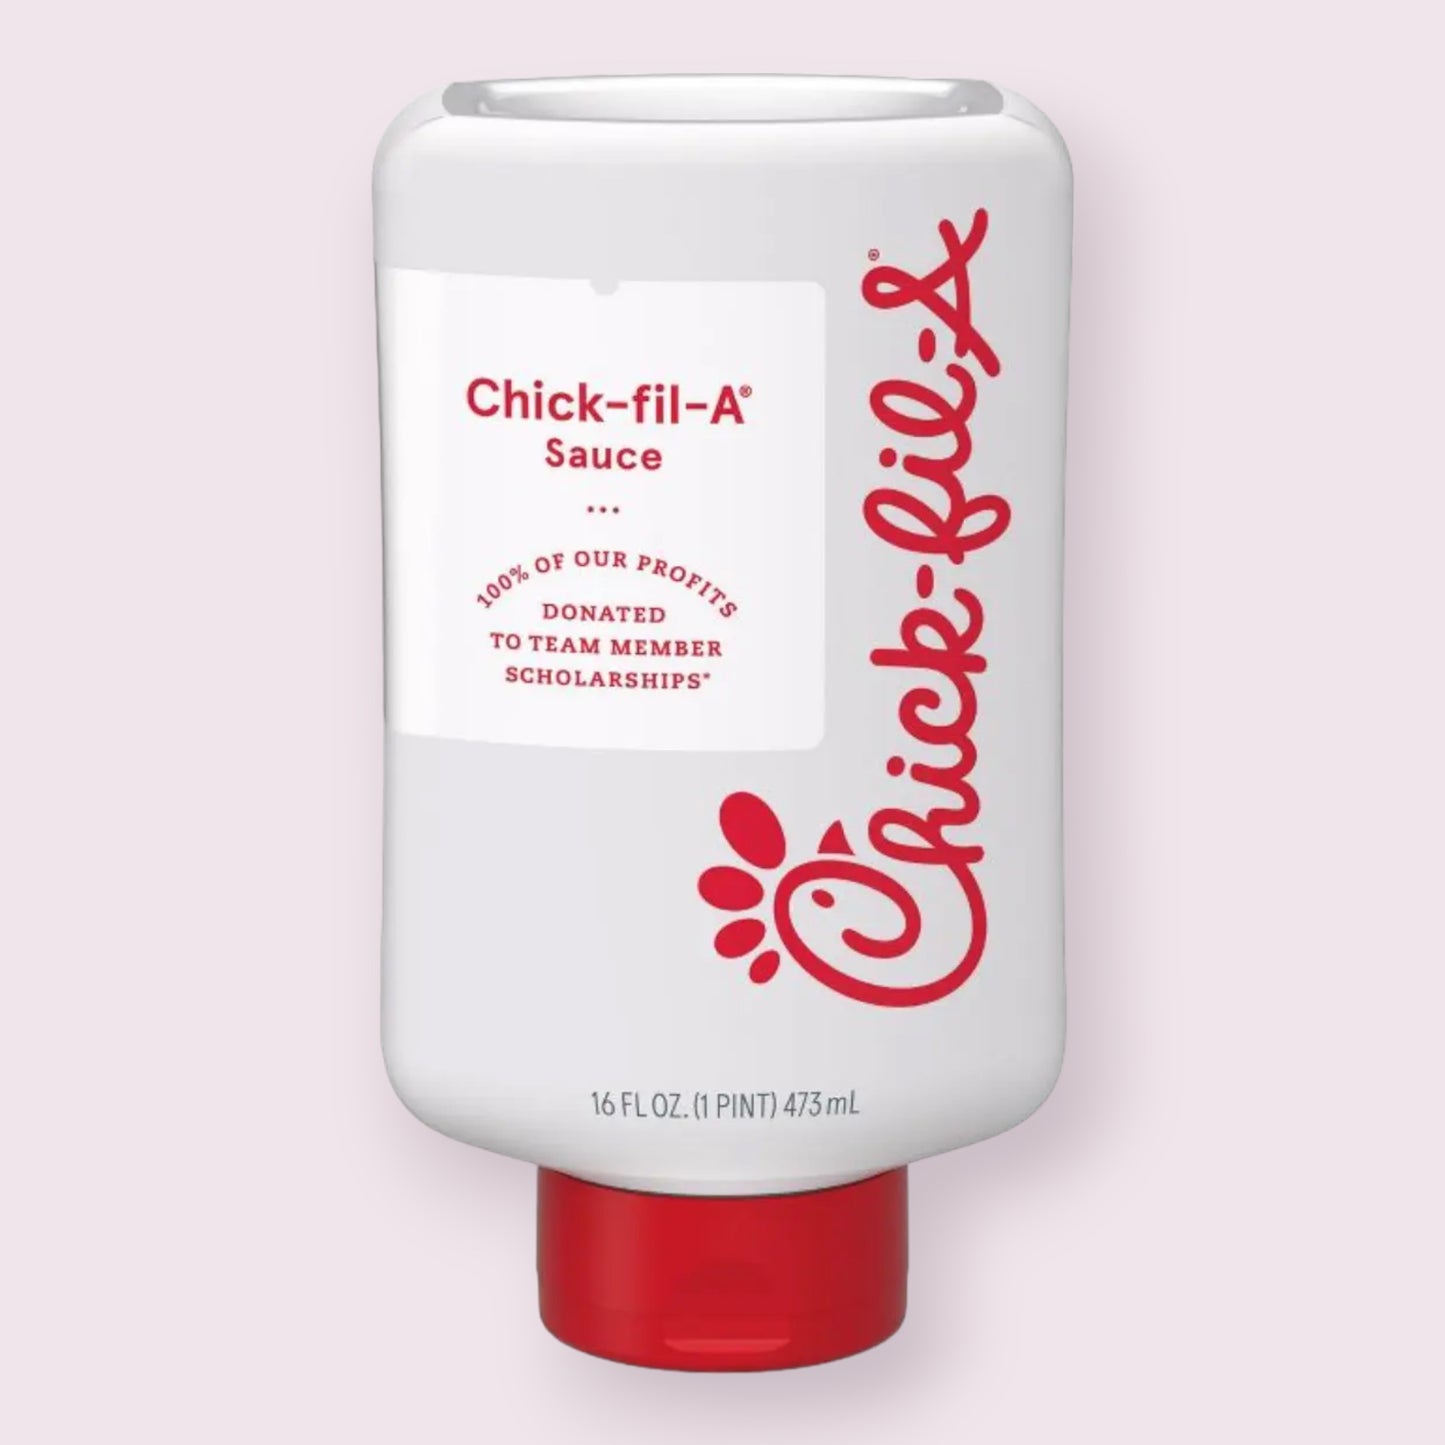 Chick-Fil-A Sauce Bottle  Pixie Candy Shoppe   